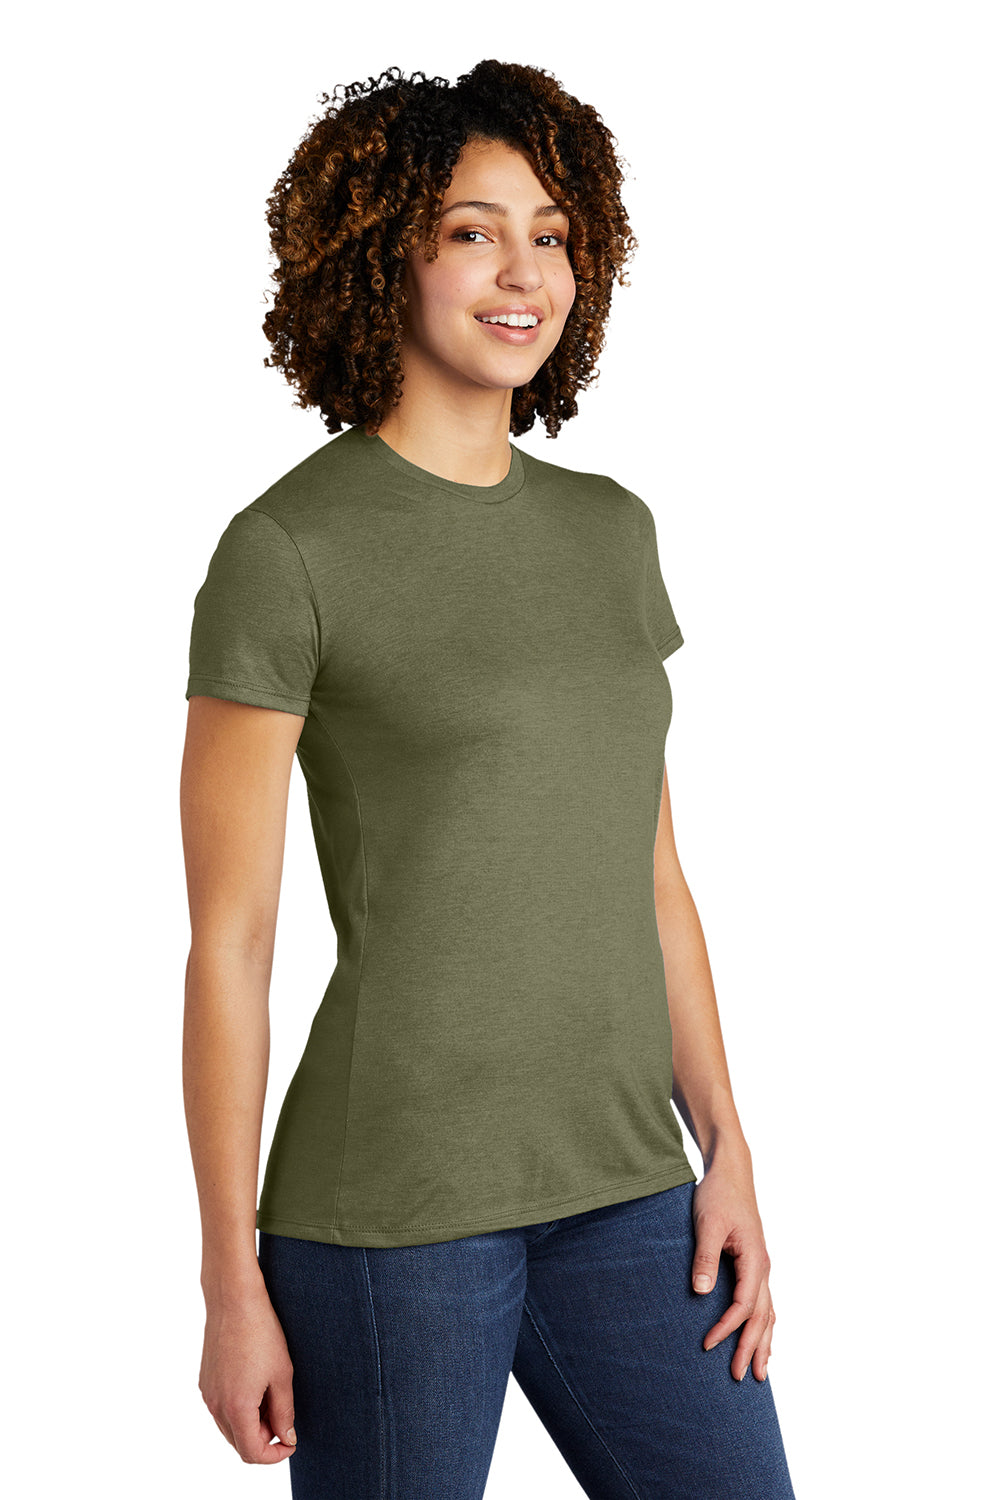 Allmade AL2008 Womens Short Sleeve Crewneck T-Shirt Olive You Green Model 3Q